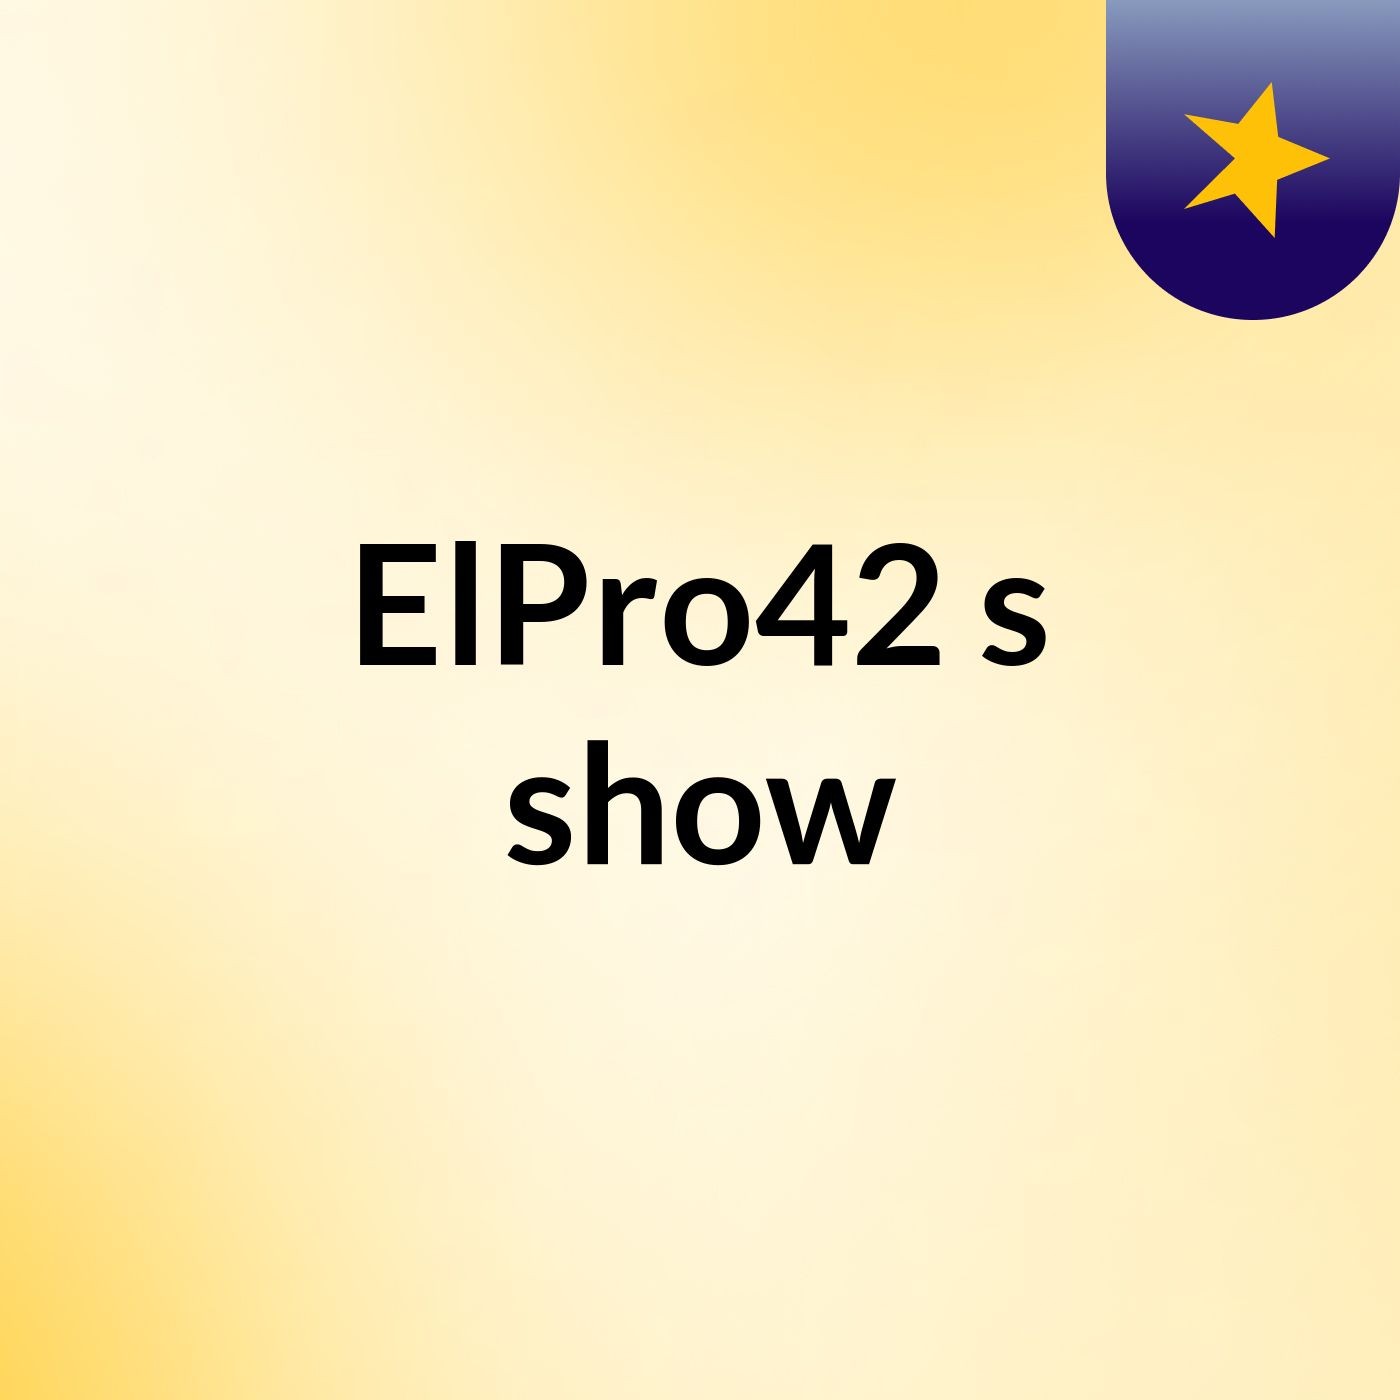 ElPro42's show